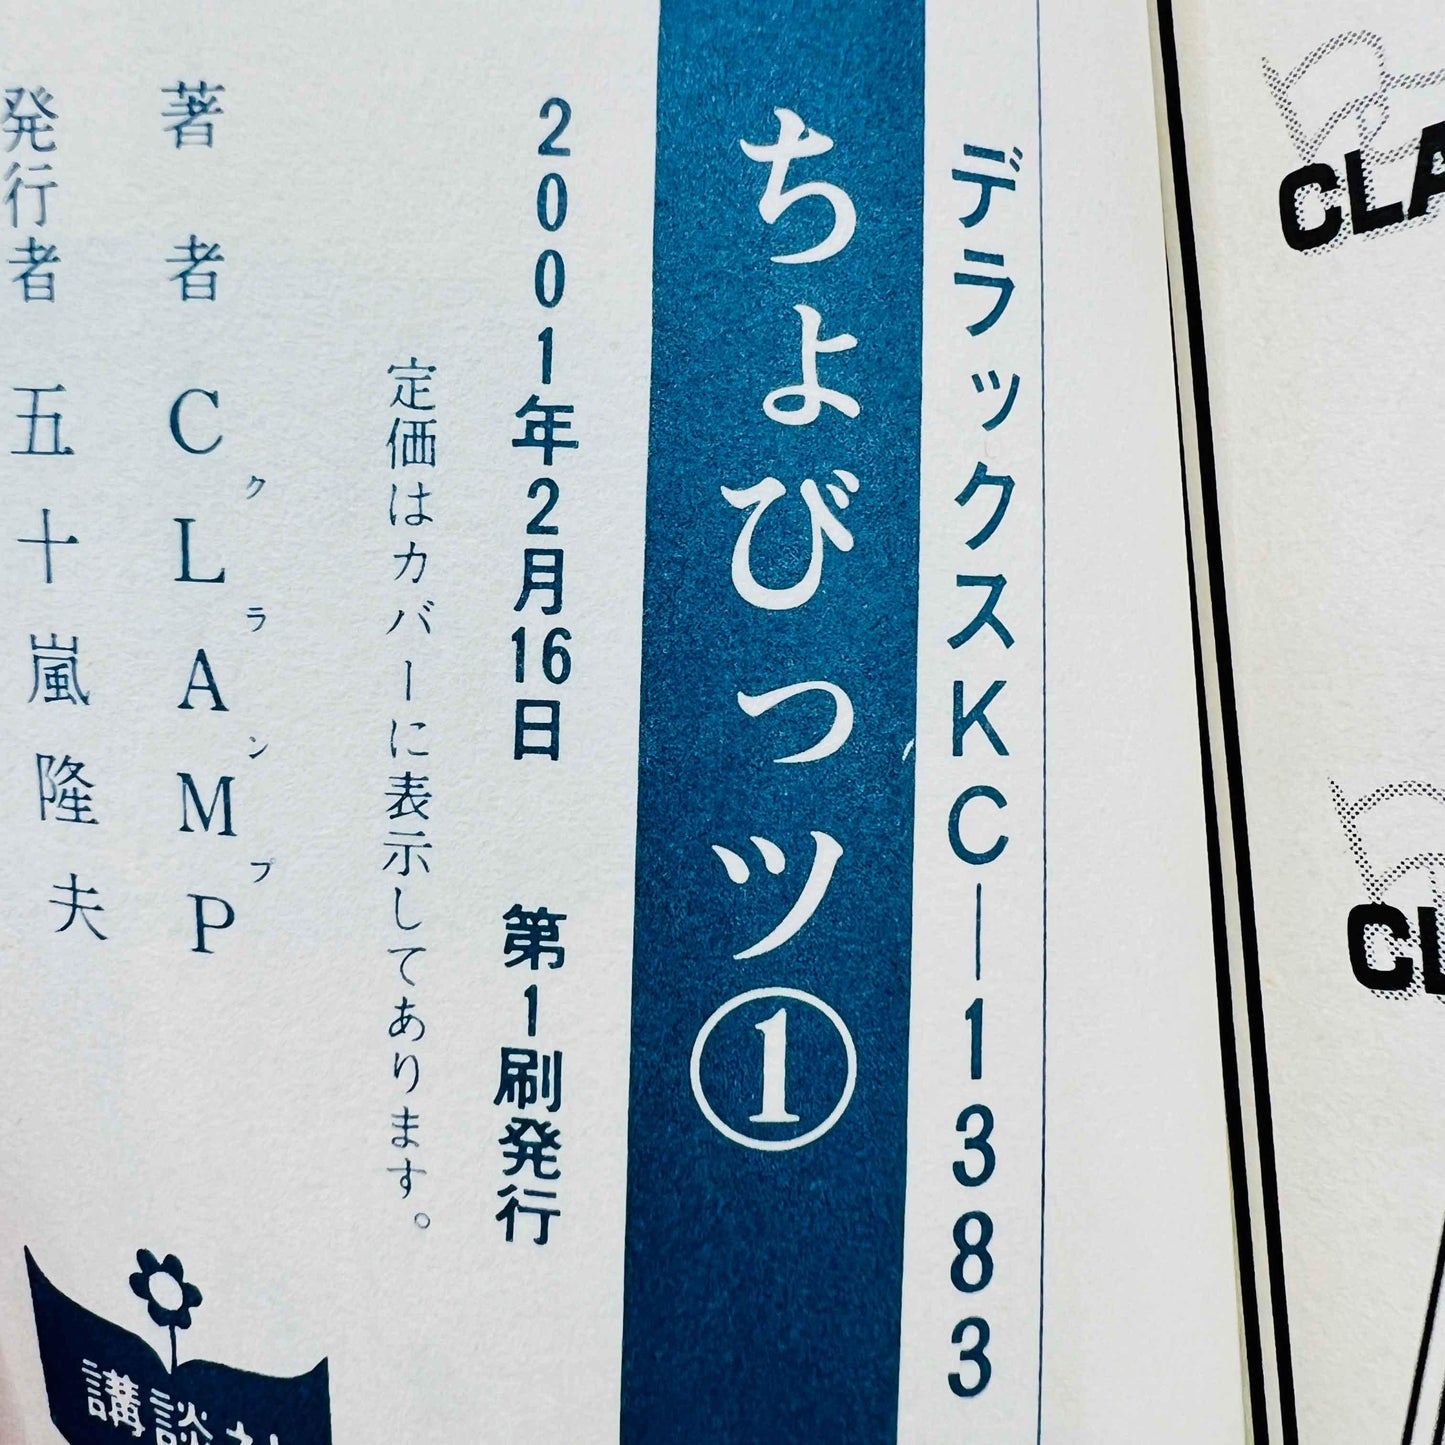 Chobits - Volume 01 /w Obi - 1stPrint.net - 1st First Print Edition Manga Store - M-CHOB-01-001